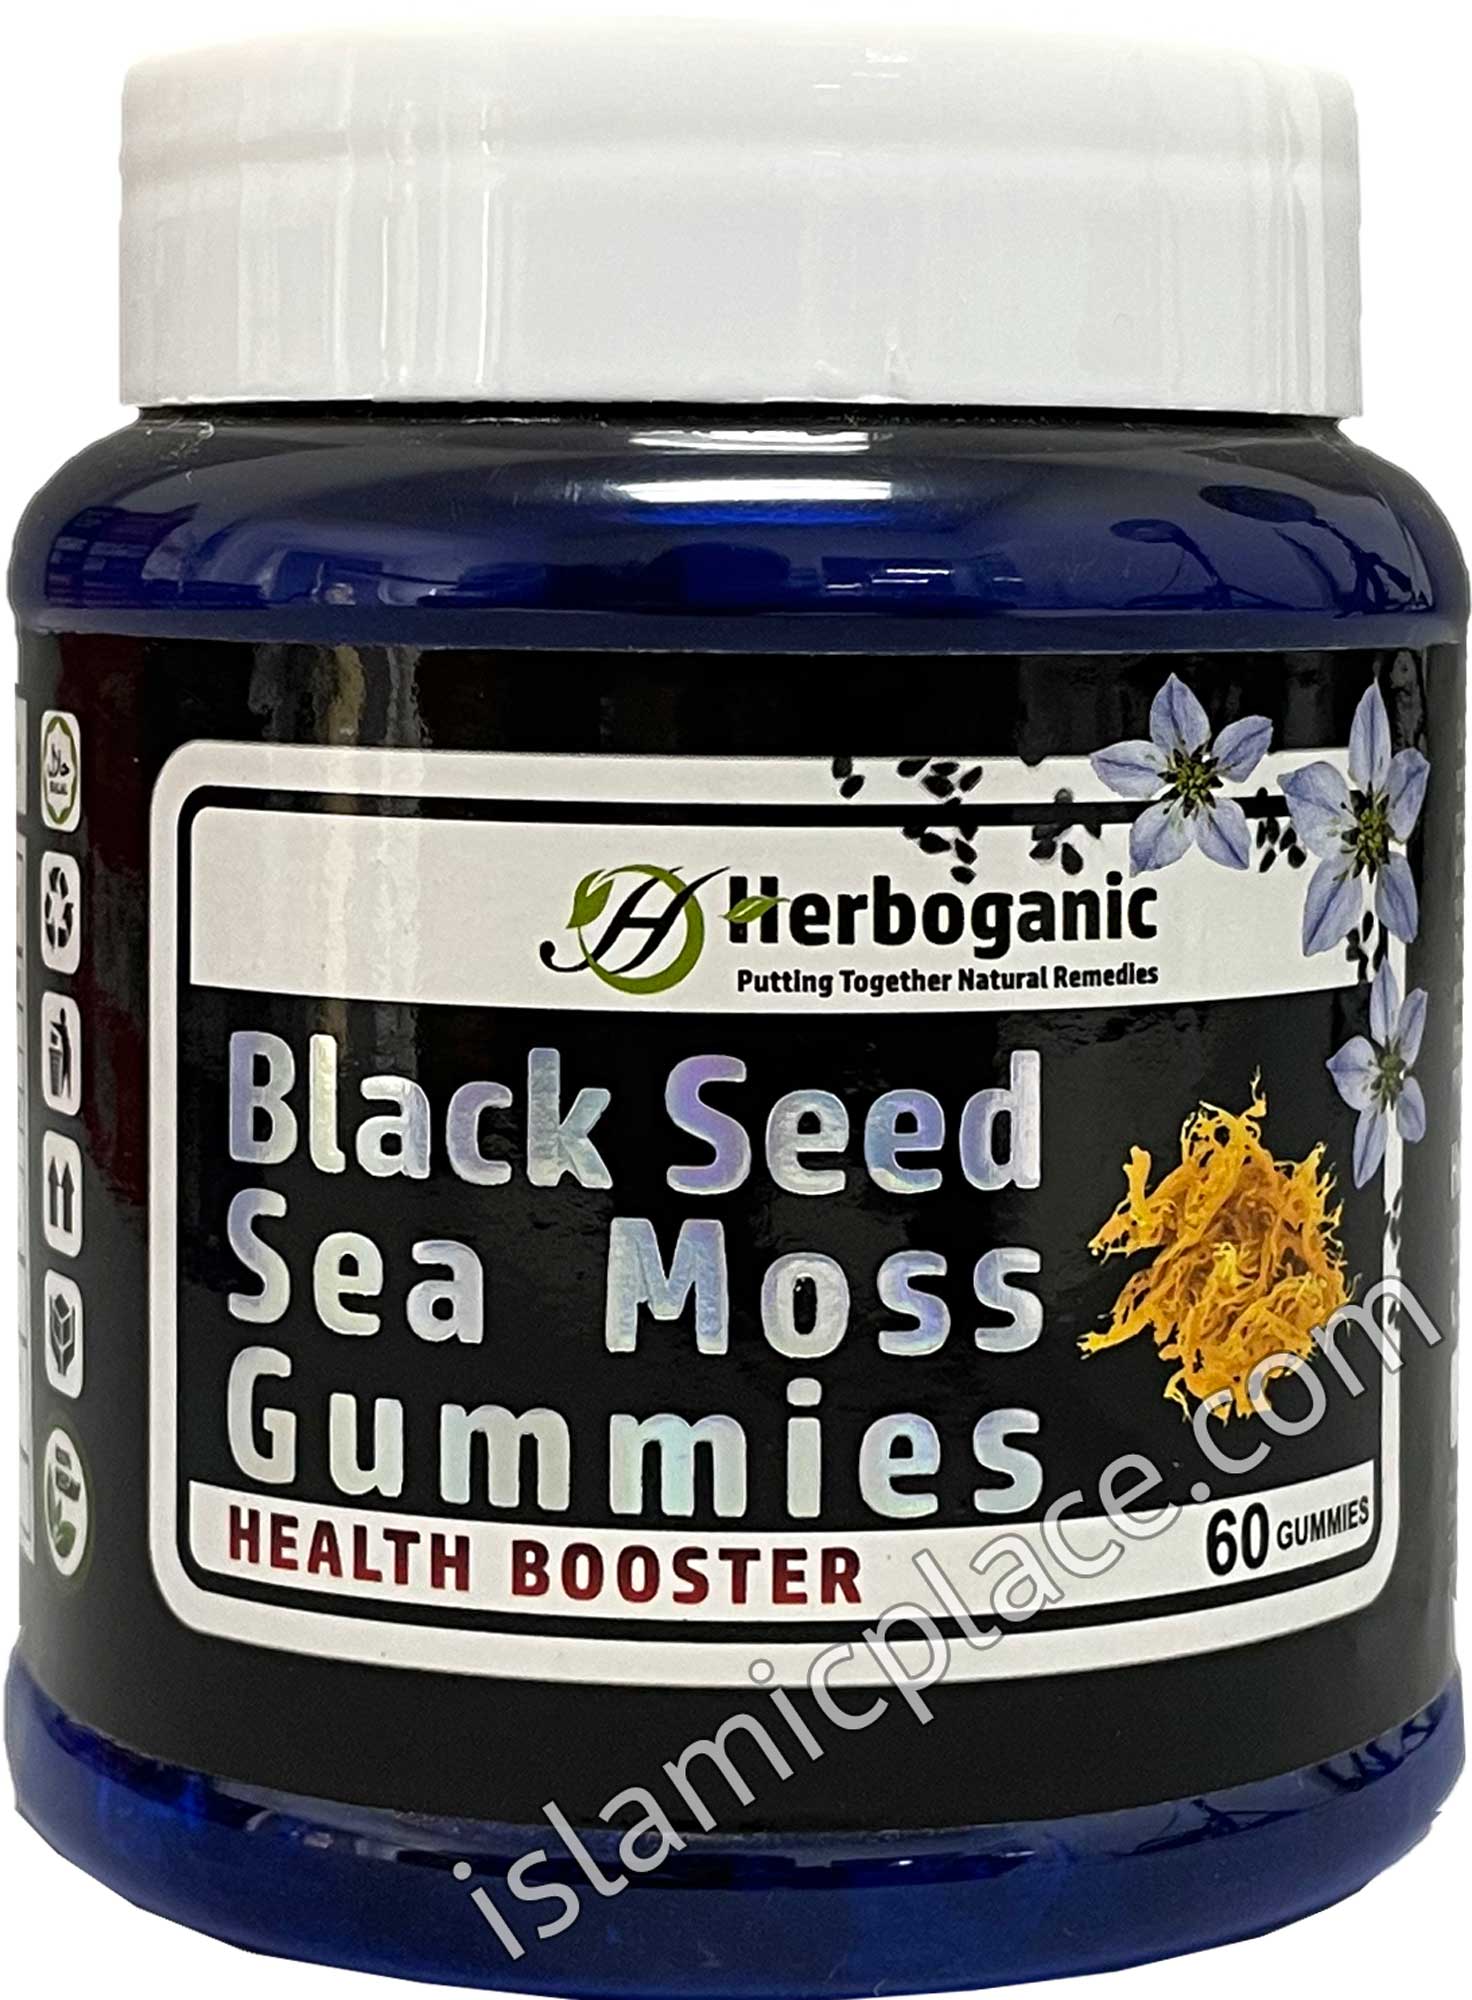 Black Seed Sea Moss Gummies - 60 Gummies